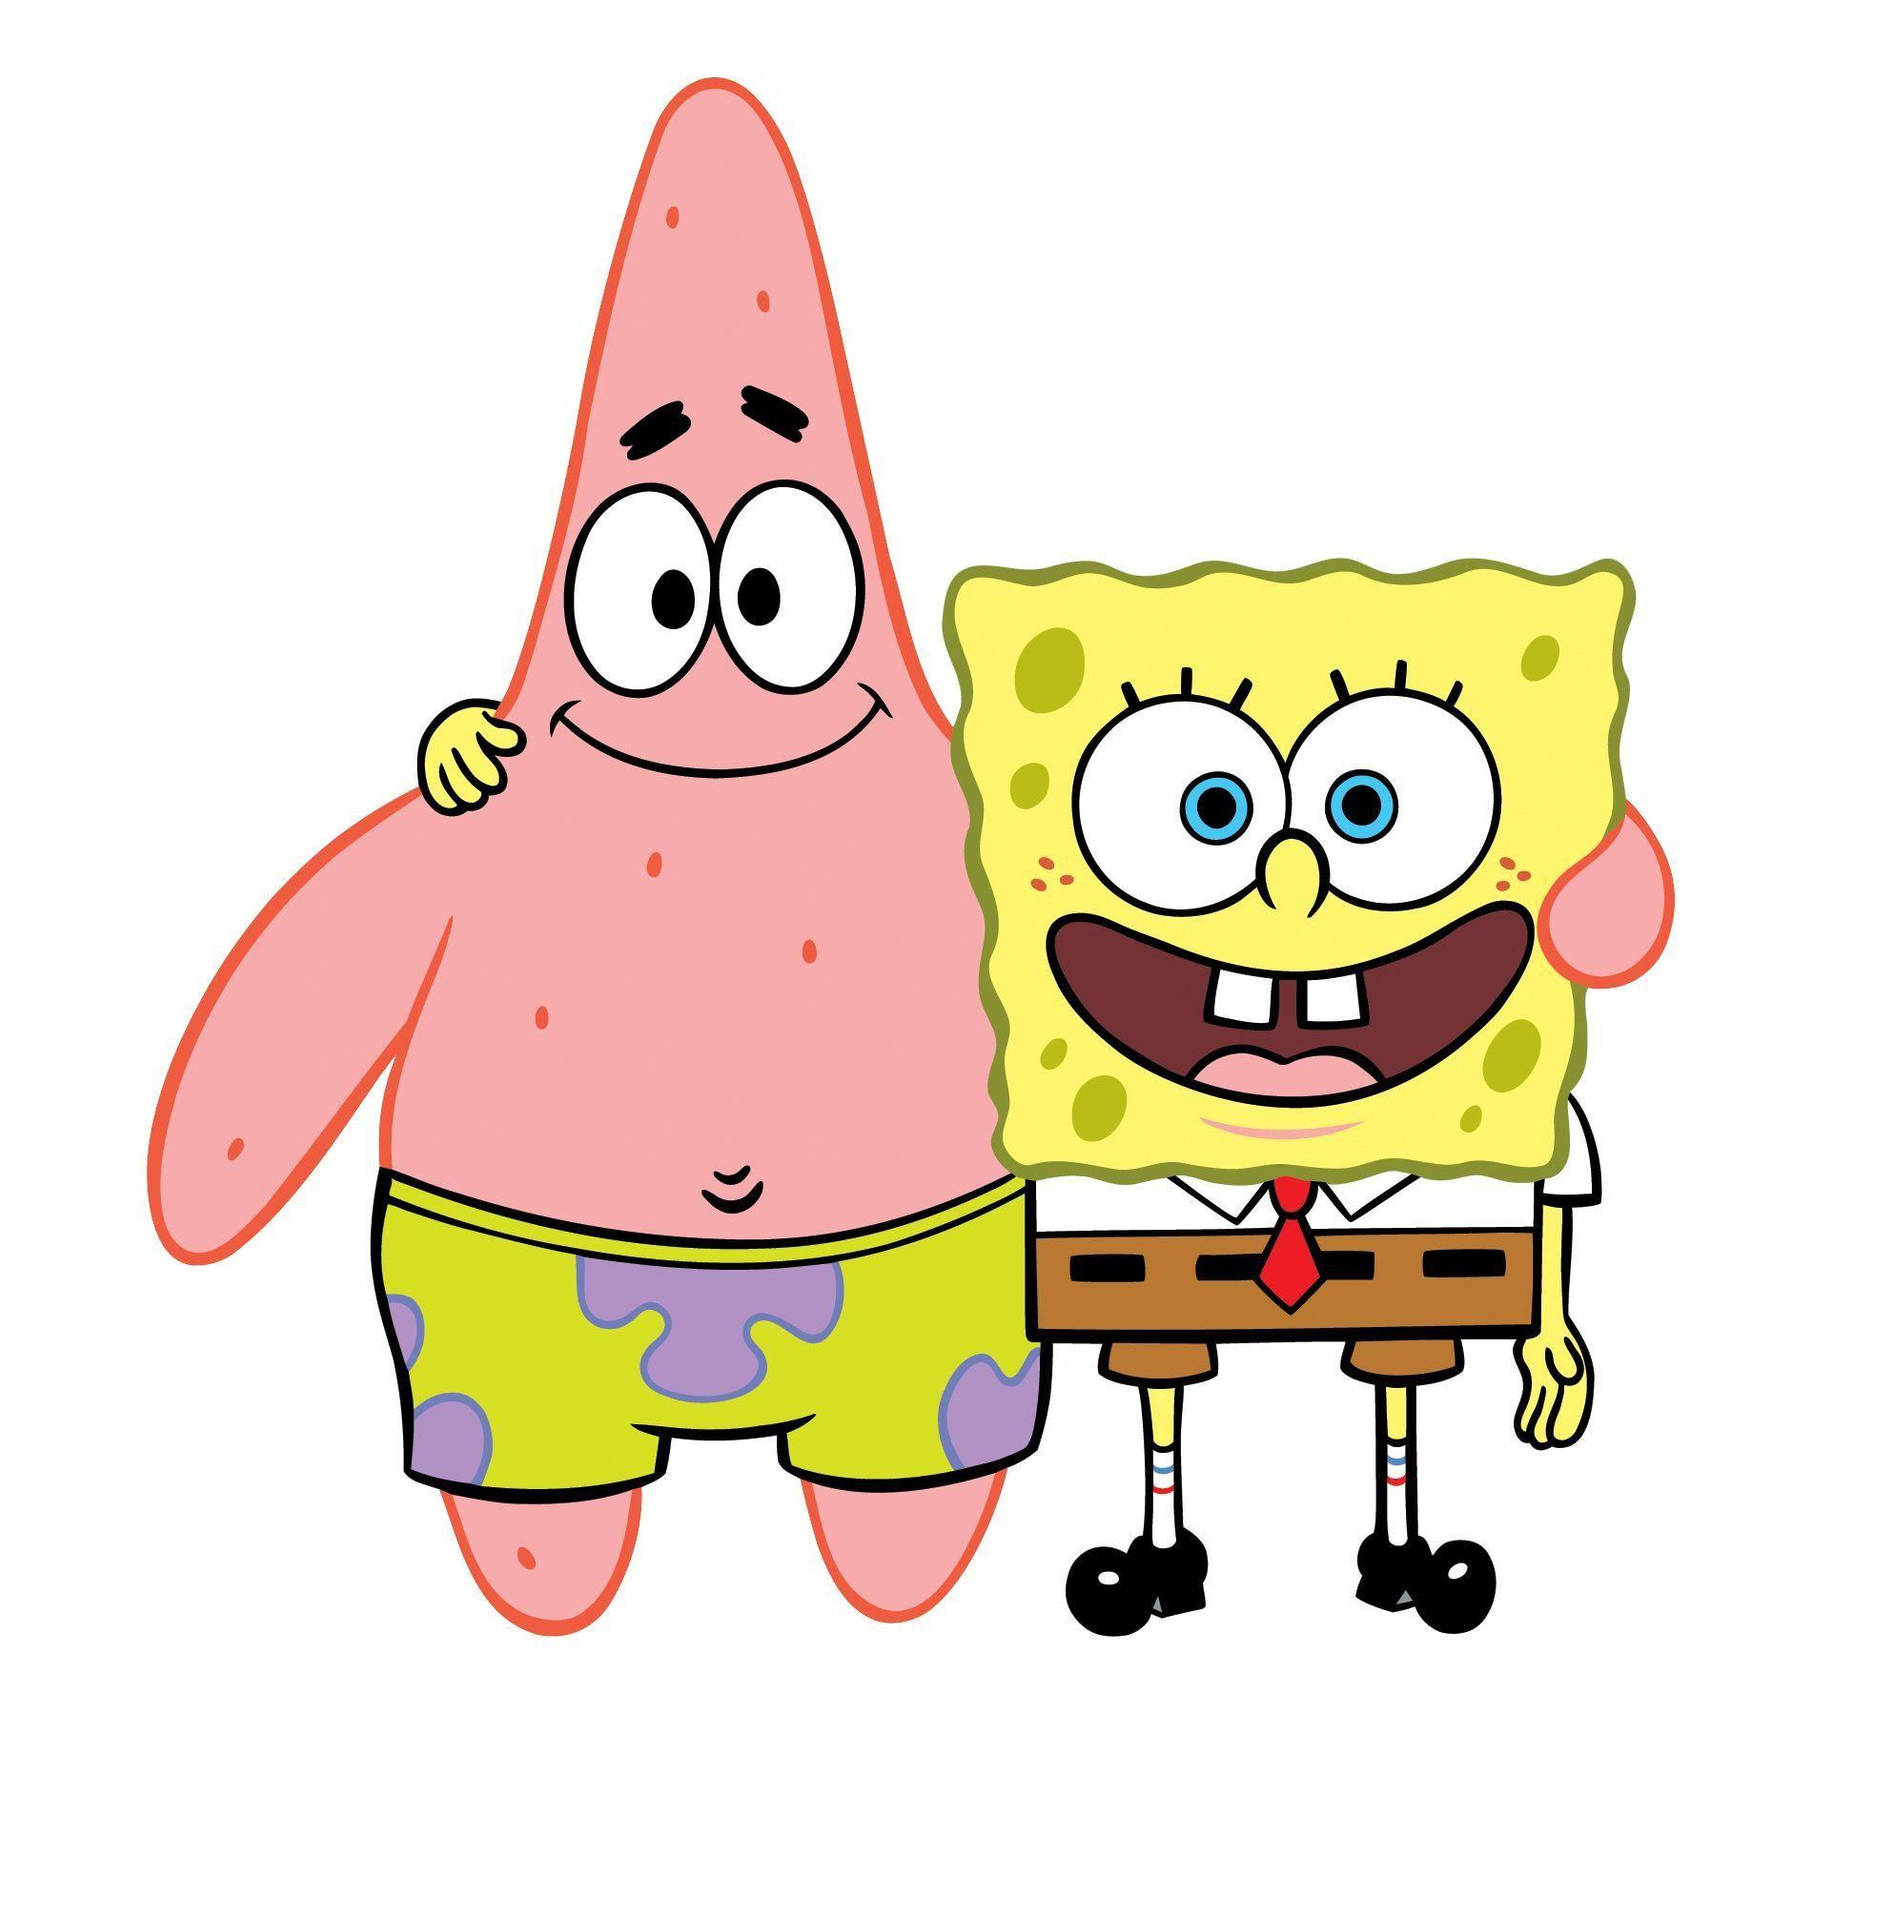 Spongebob And Patrick Plain White Background